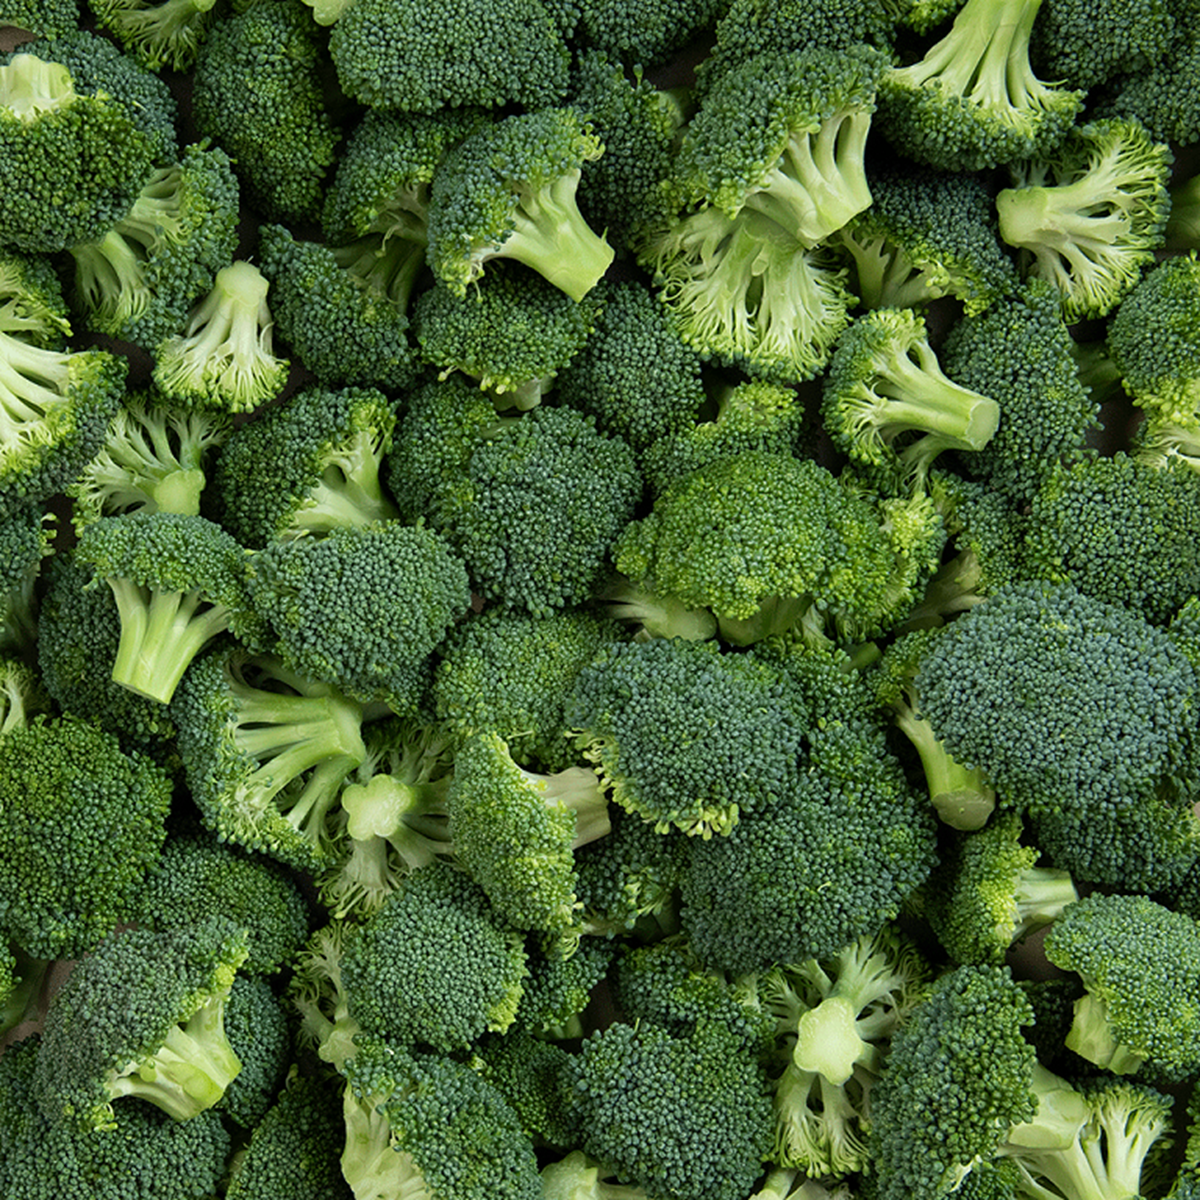 Broccoli : A rich source of Antioxidants